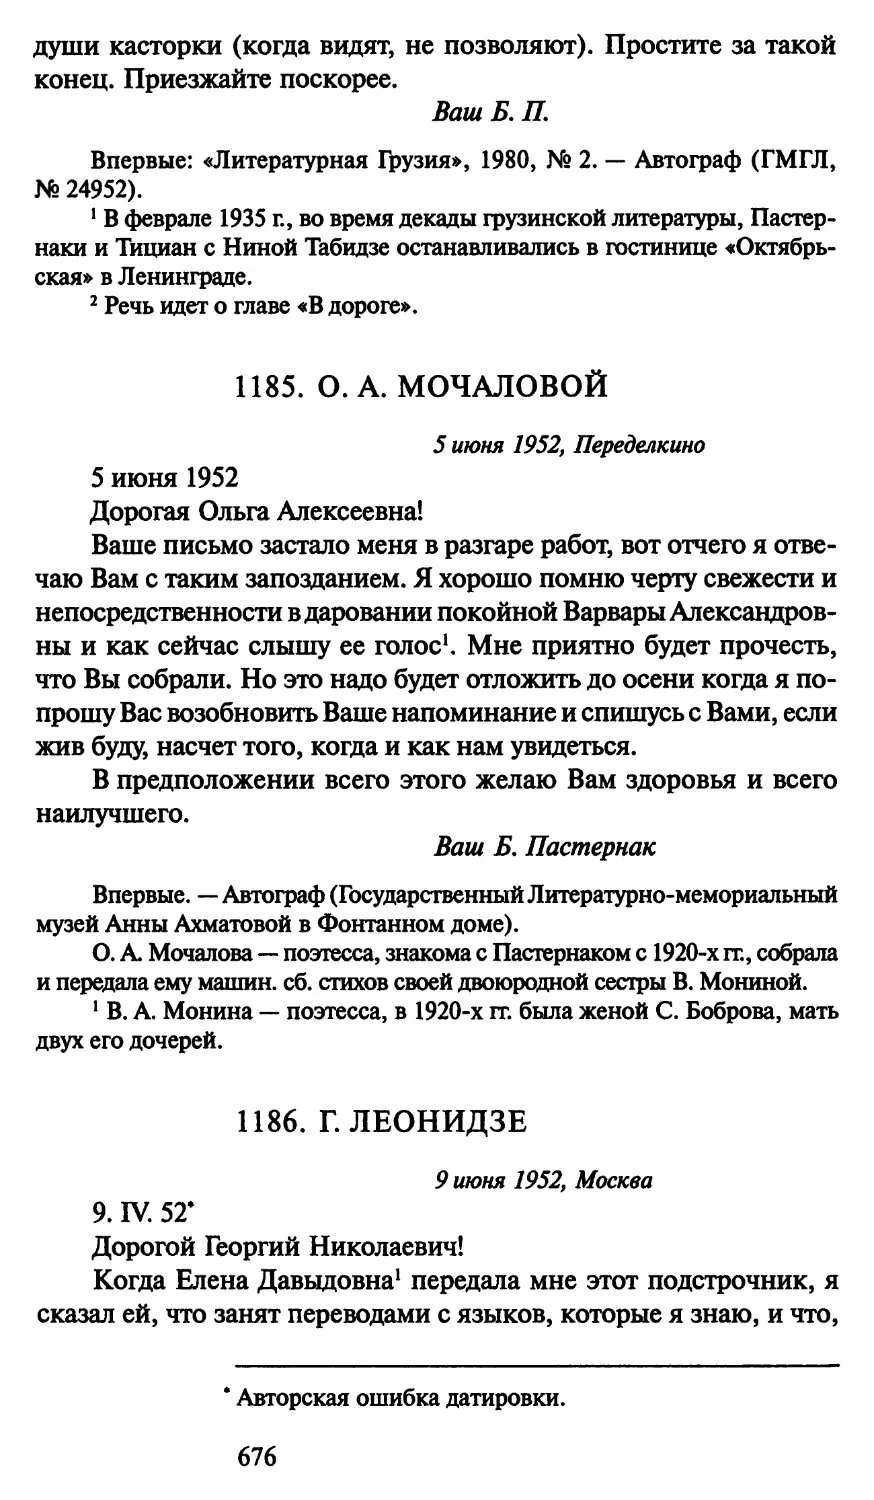 1186. Г. Леонидзе 9 июня 1952